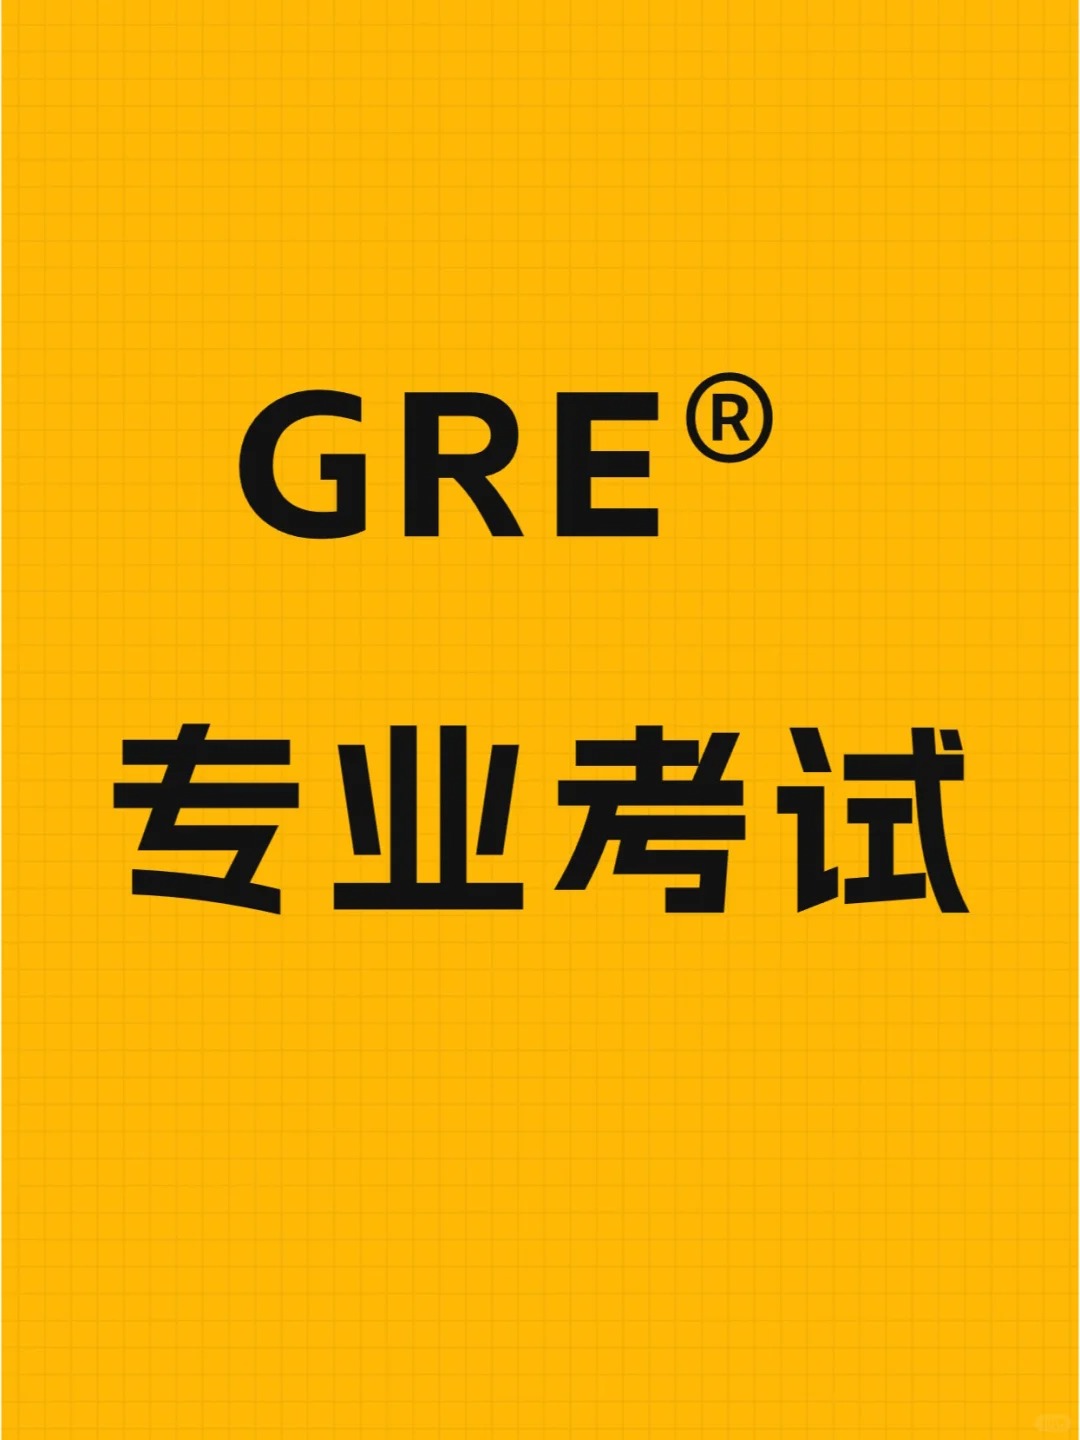 GRE专业考试介绍/GRE Subject Test